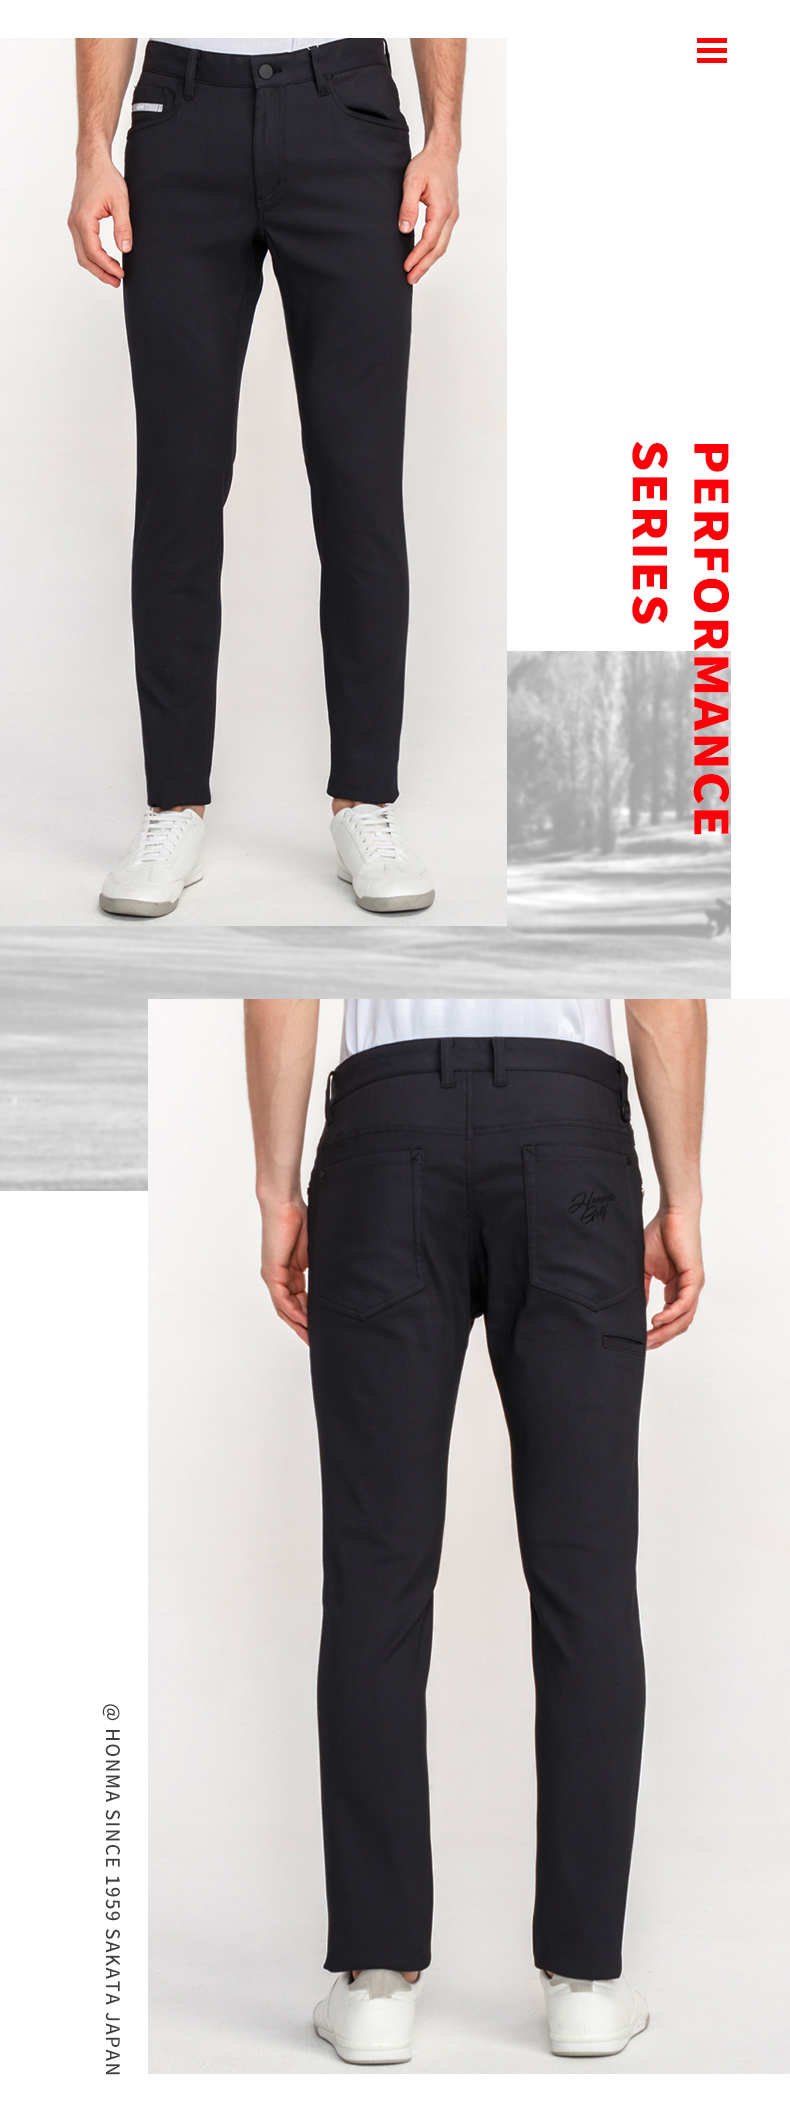 HONMA新款高尔夫男子长裤防滑条简约口袋服帖修身有型